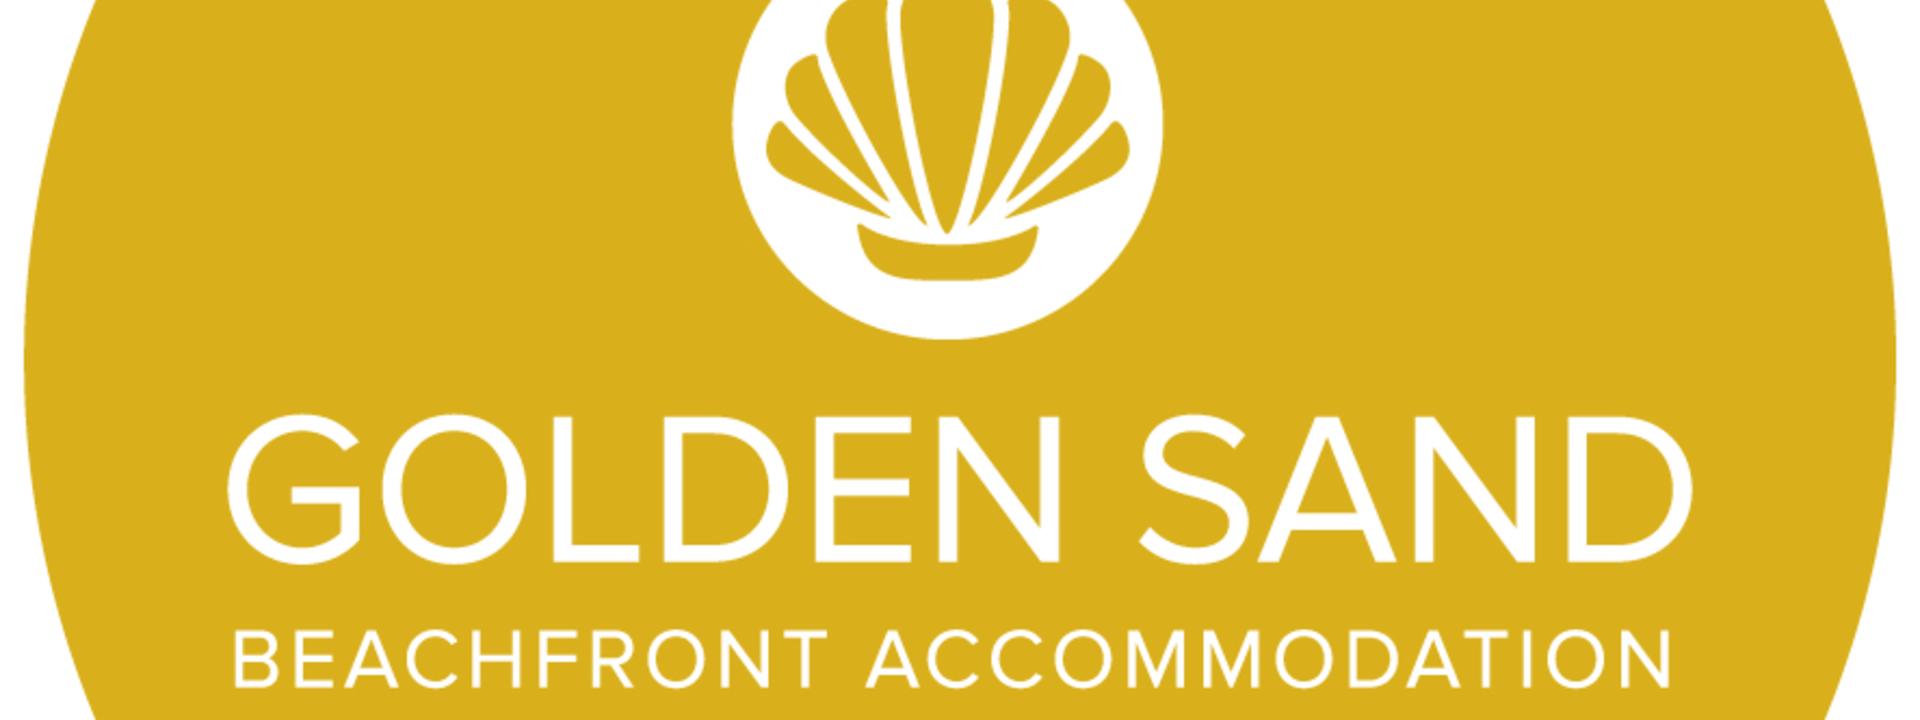 golden-sand-circle-logo-01.jpg